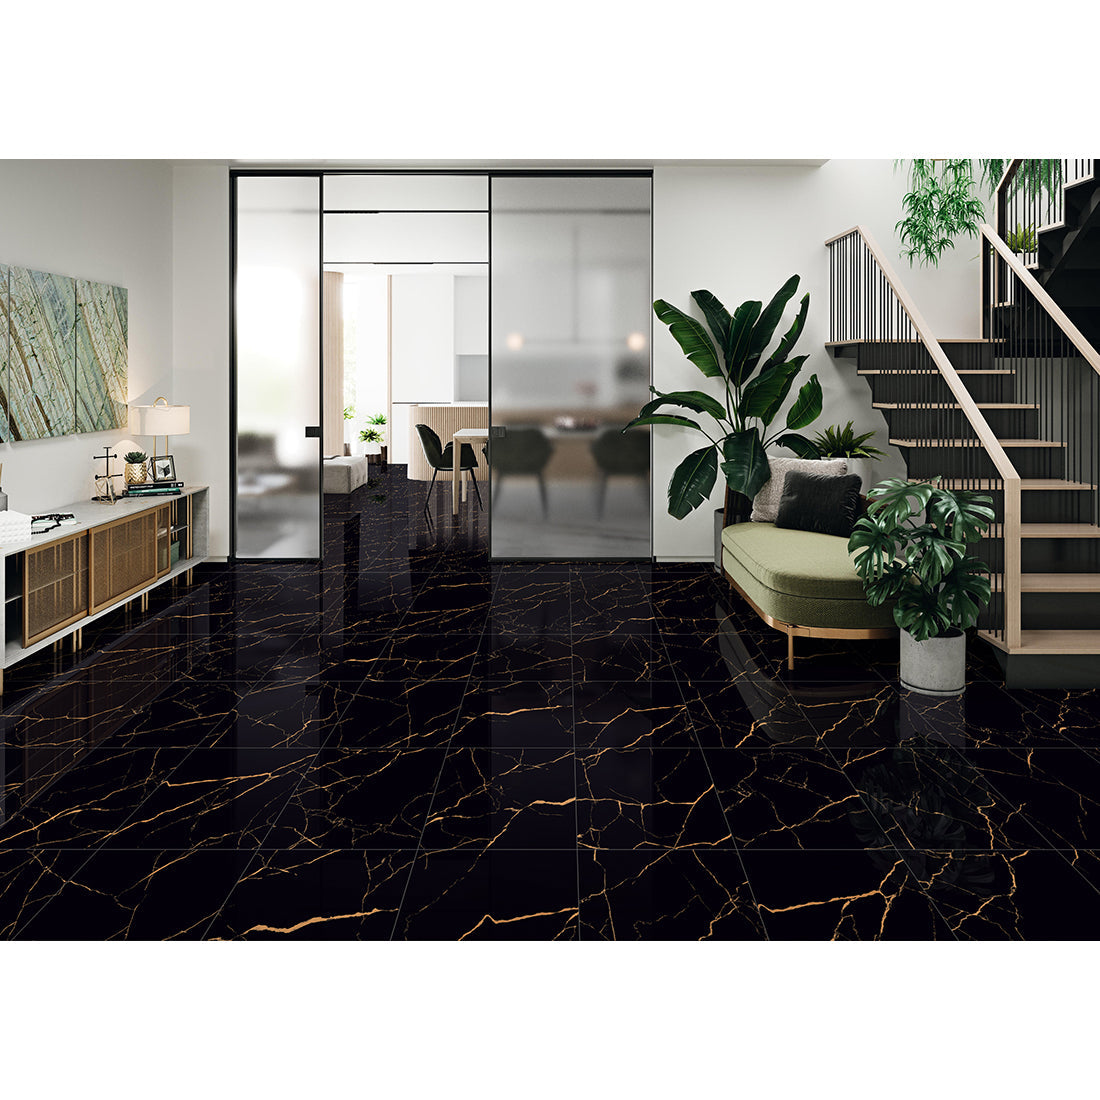 Epitome Black & Gold High Gloss Porcelain 60x60cm Kitchen Bathroom Wall & Floor Tile